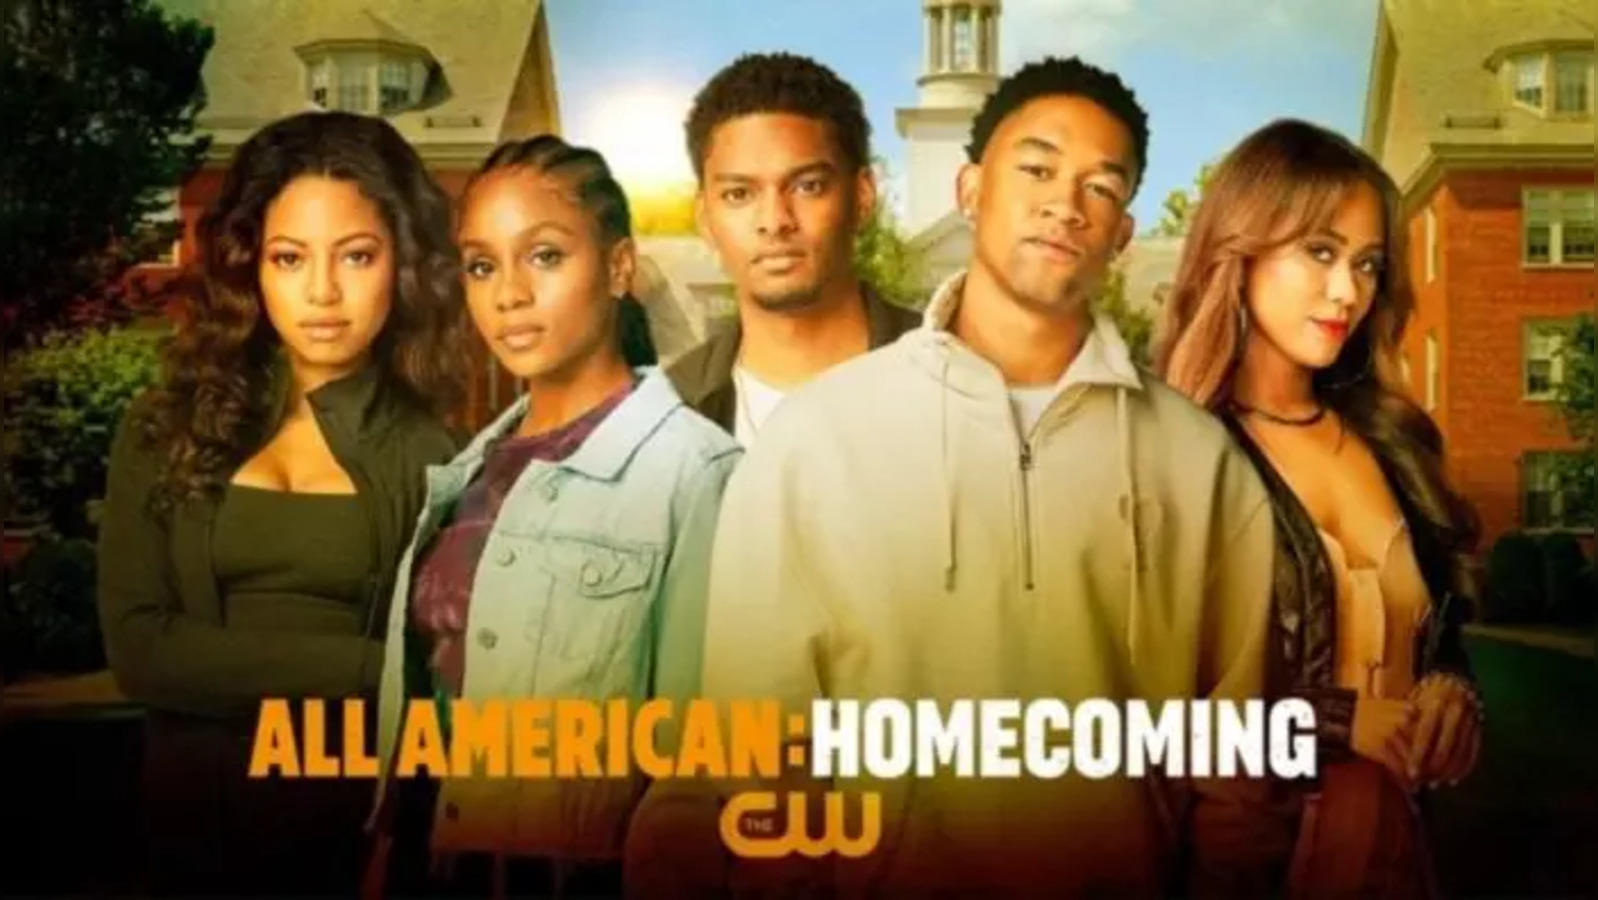 All American Homecoming Season 3 Trailer, Release Date